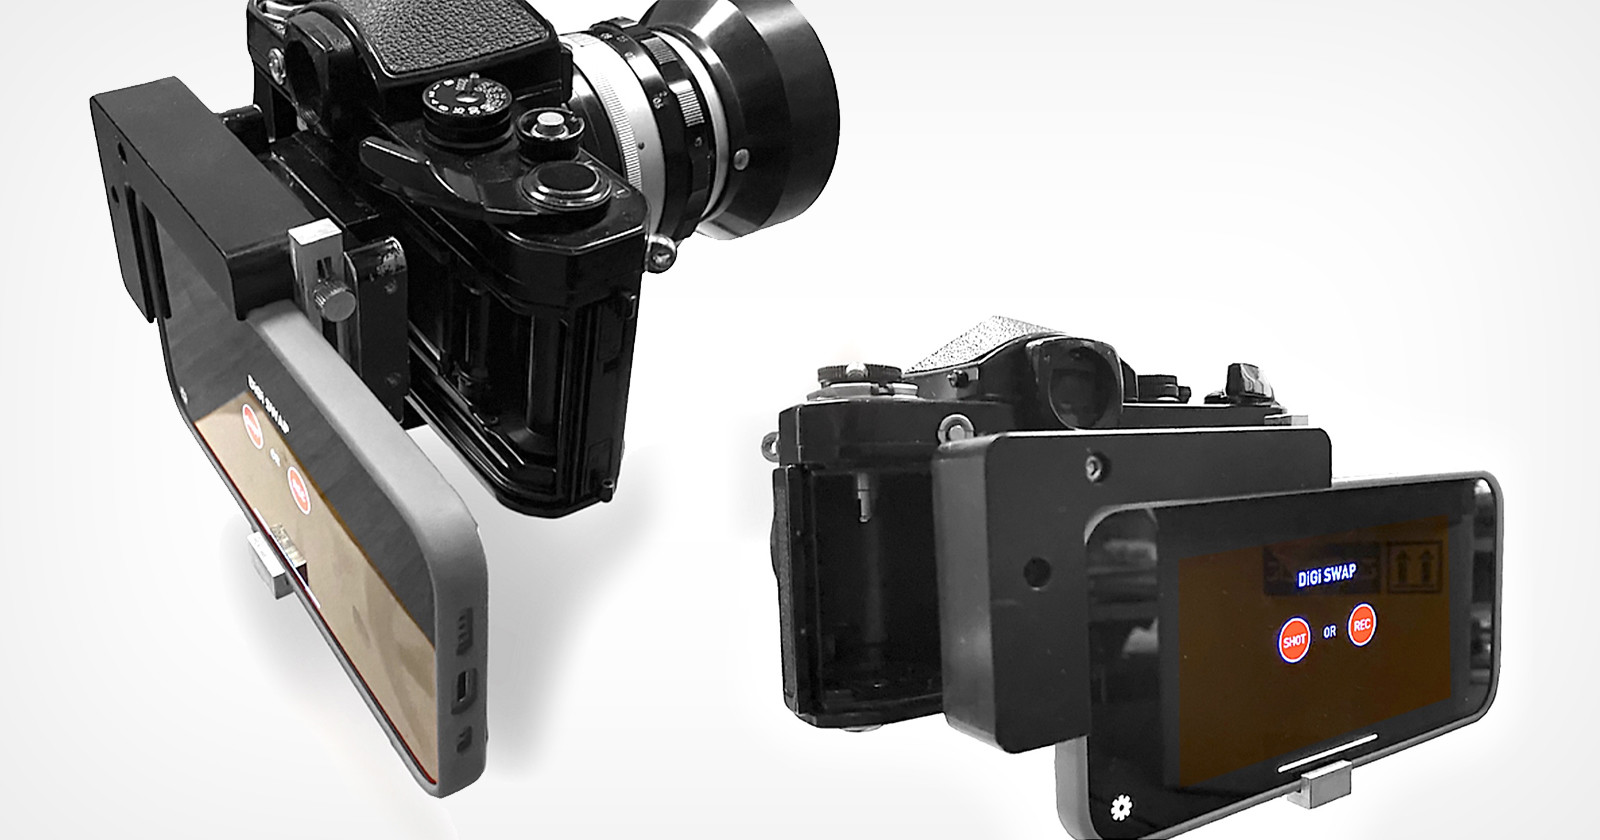  digi swap lets film cameras shoot directly 